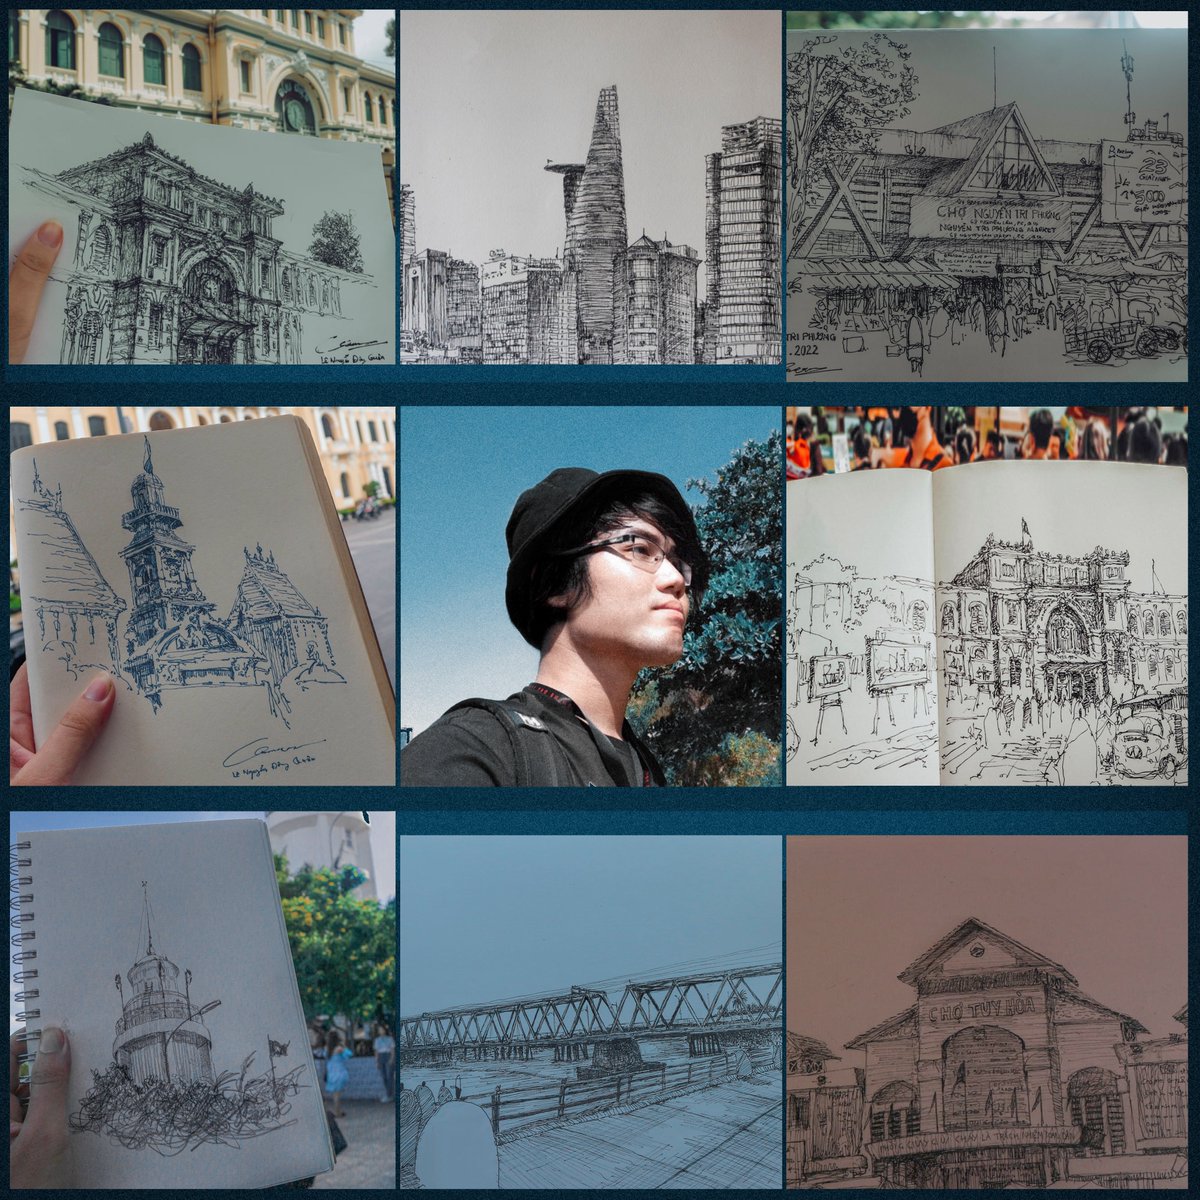 Urban Sketching - Quan Art Drawing - Vẽ ký họa
Artist vs Art 2022 and Happy new year 2023 #artistvsart2022 #artistvsart #ArtistOnTwitter #artists #art #drawing #sketch #Vietnam #phuyen #saigon #vungtau #bitexco #downtown #architecture #sketchbook #travelsketch #Travel